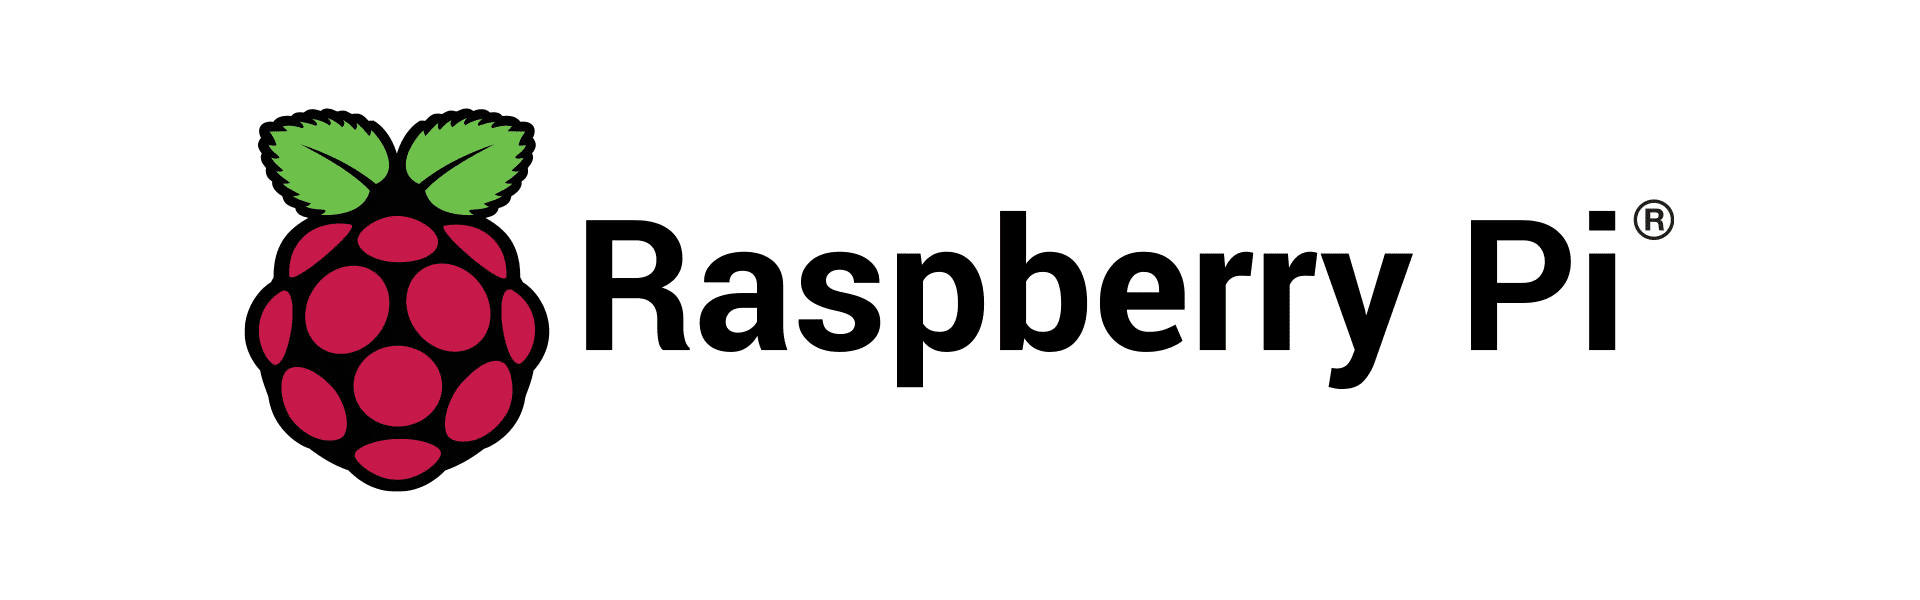 Raspberry Pi 3 Model B + Review Logo